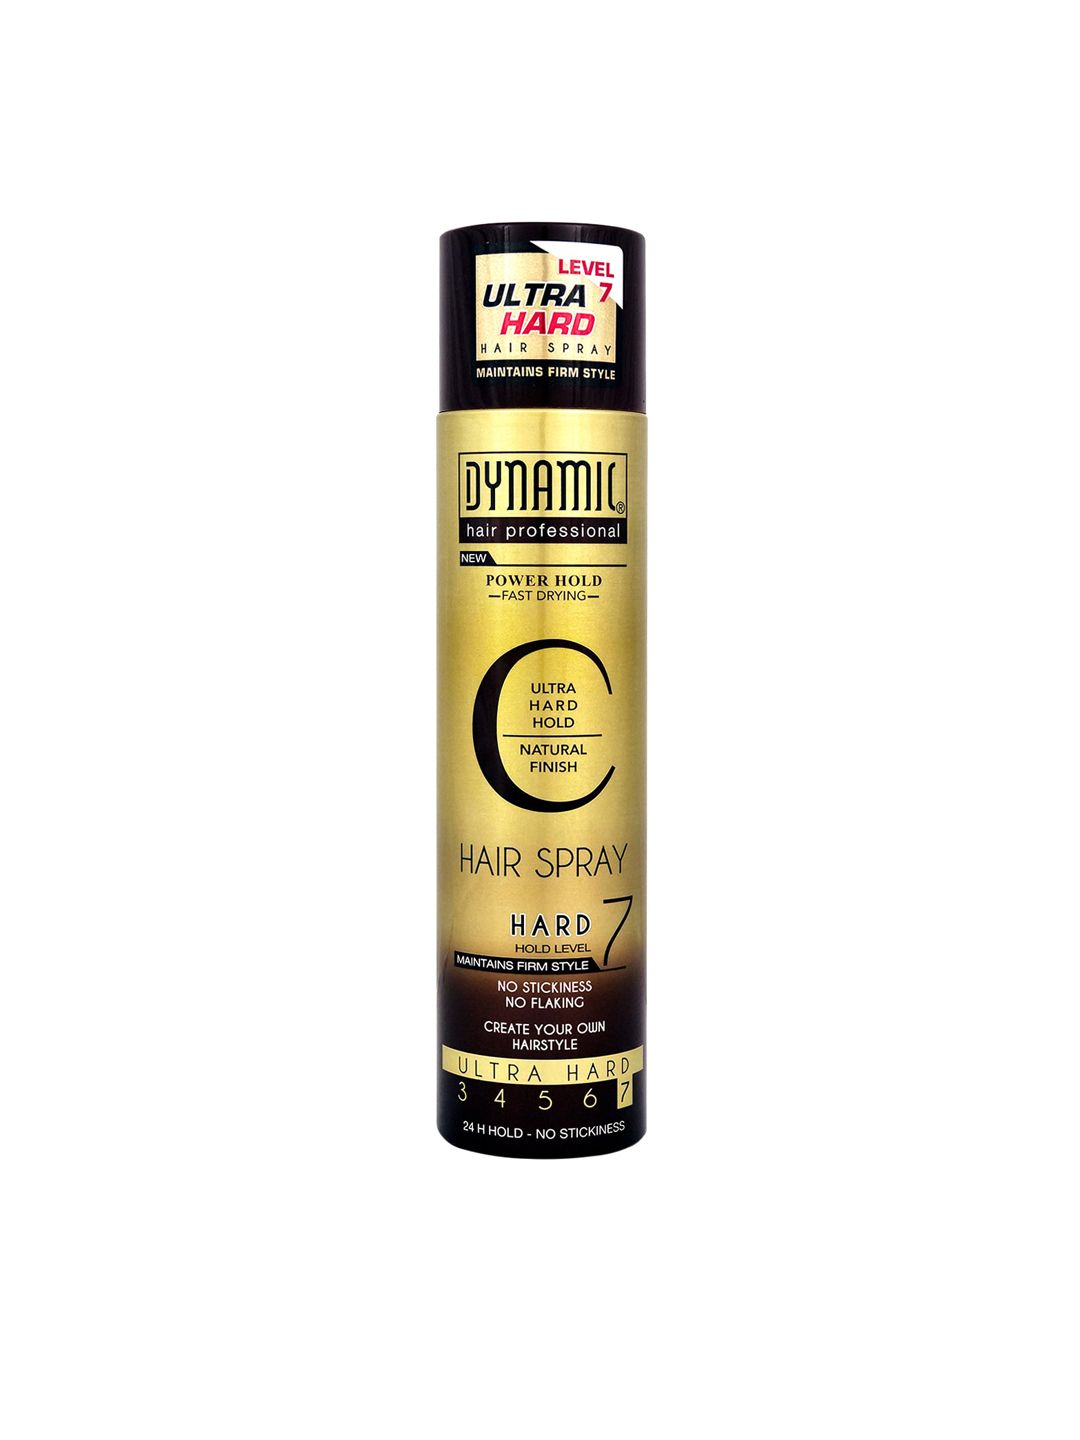 Dynamic Sweet Heart Hair Spray - Hard Hold Level 7 250 ml Price in India